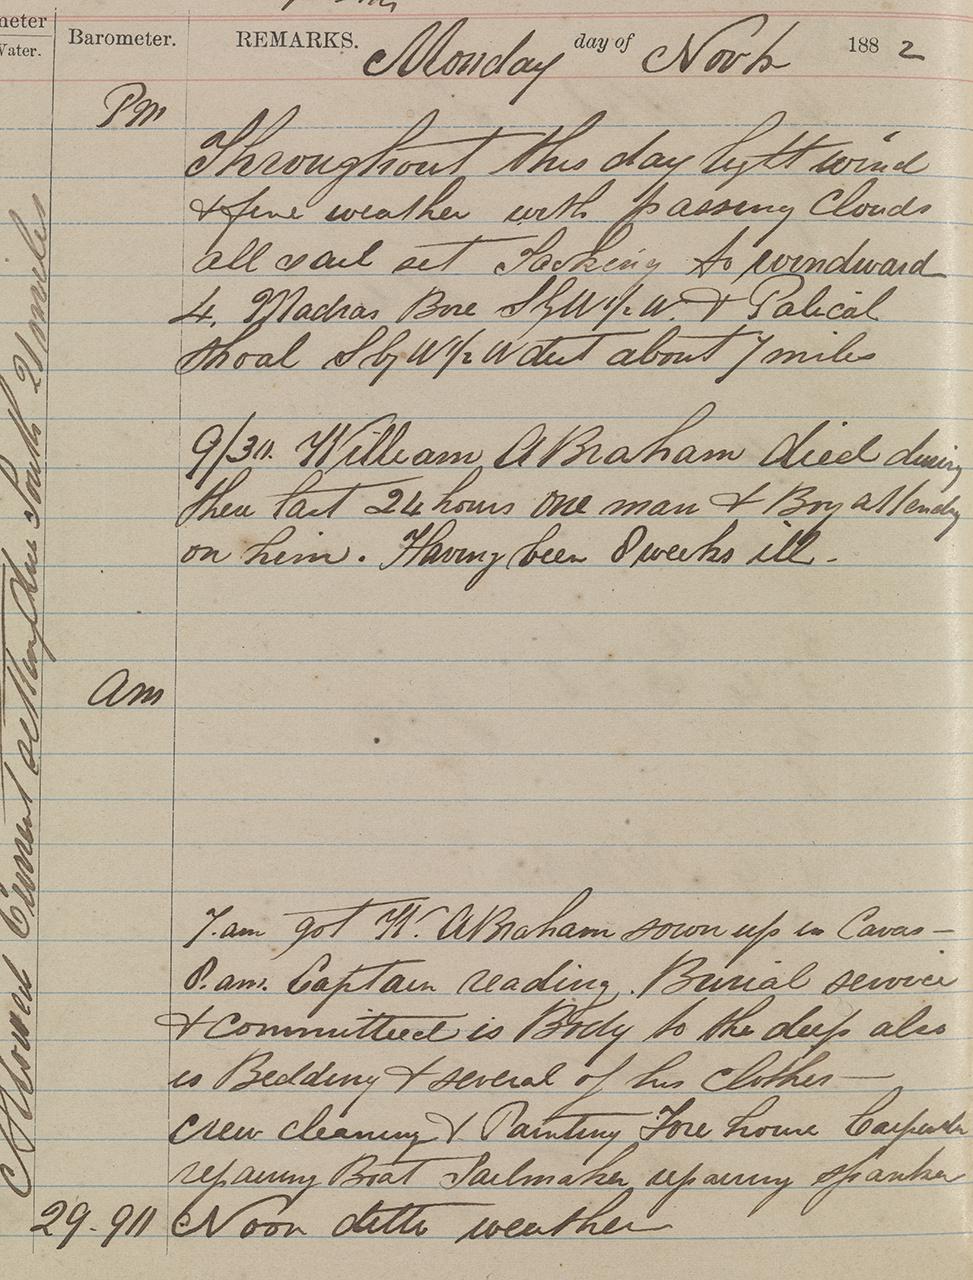 Captain Moore's logbook - 6th November 1882